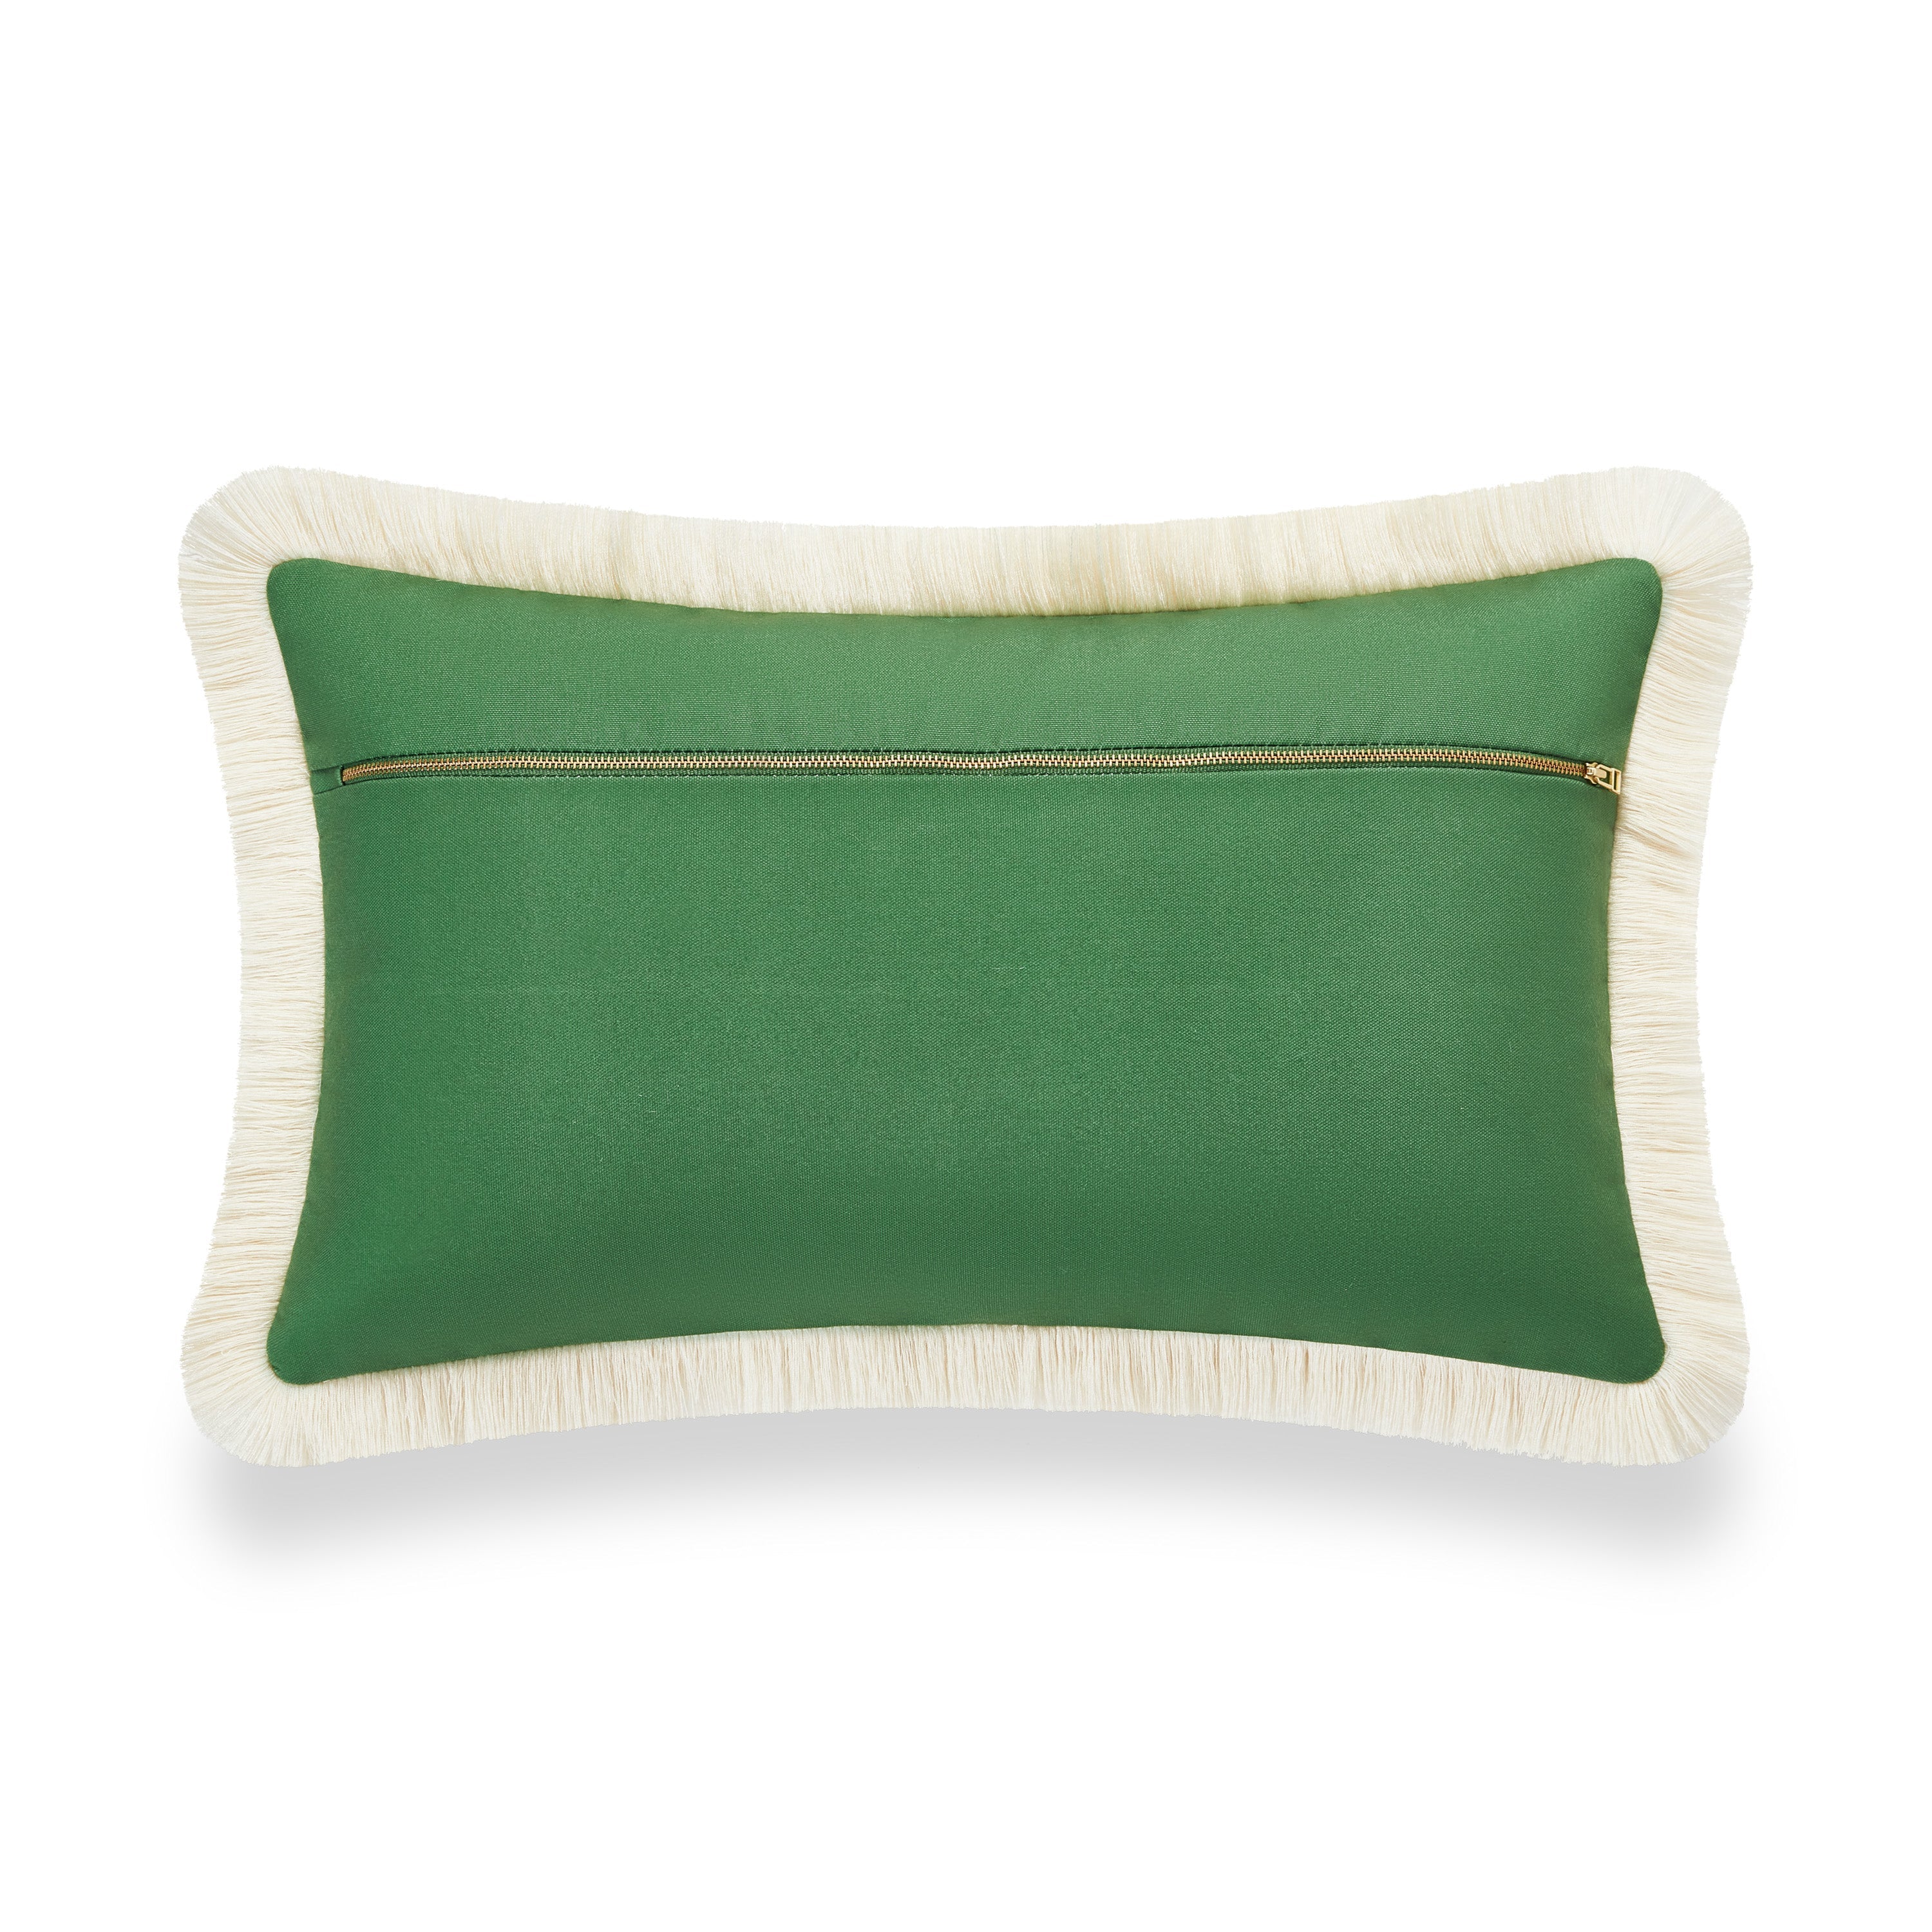 Coastal Indoor Outdoor Lumbar Pillow Cover, Monstera Leaf Fringe, Green, 12"x20"